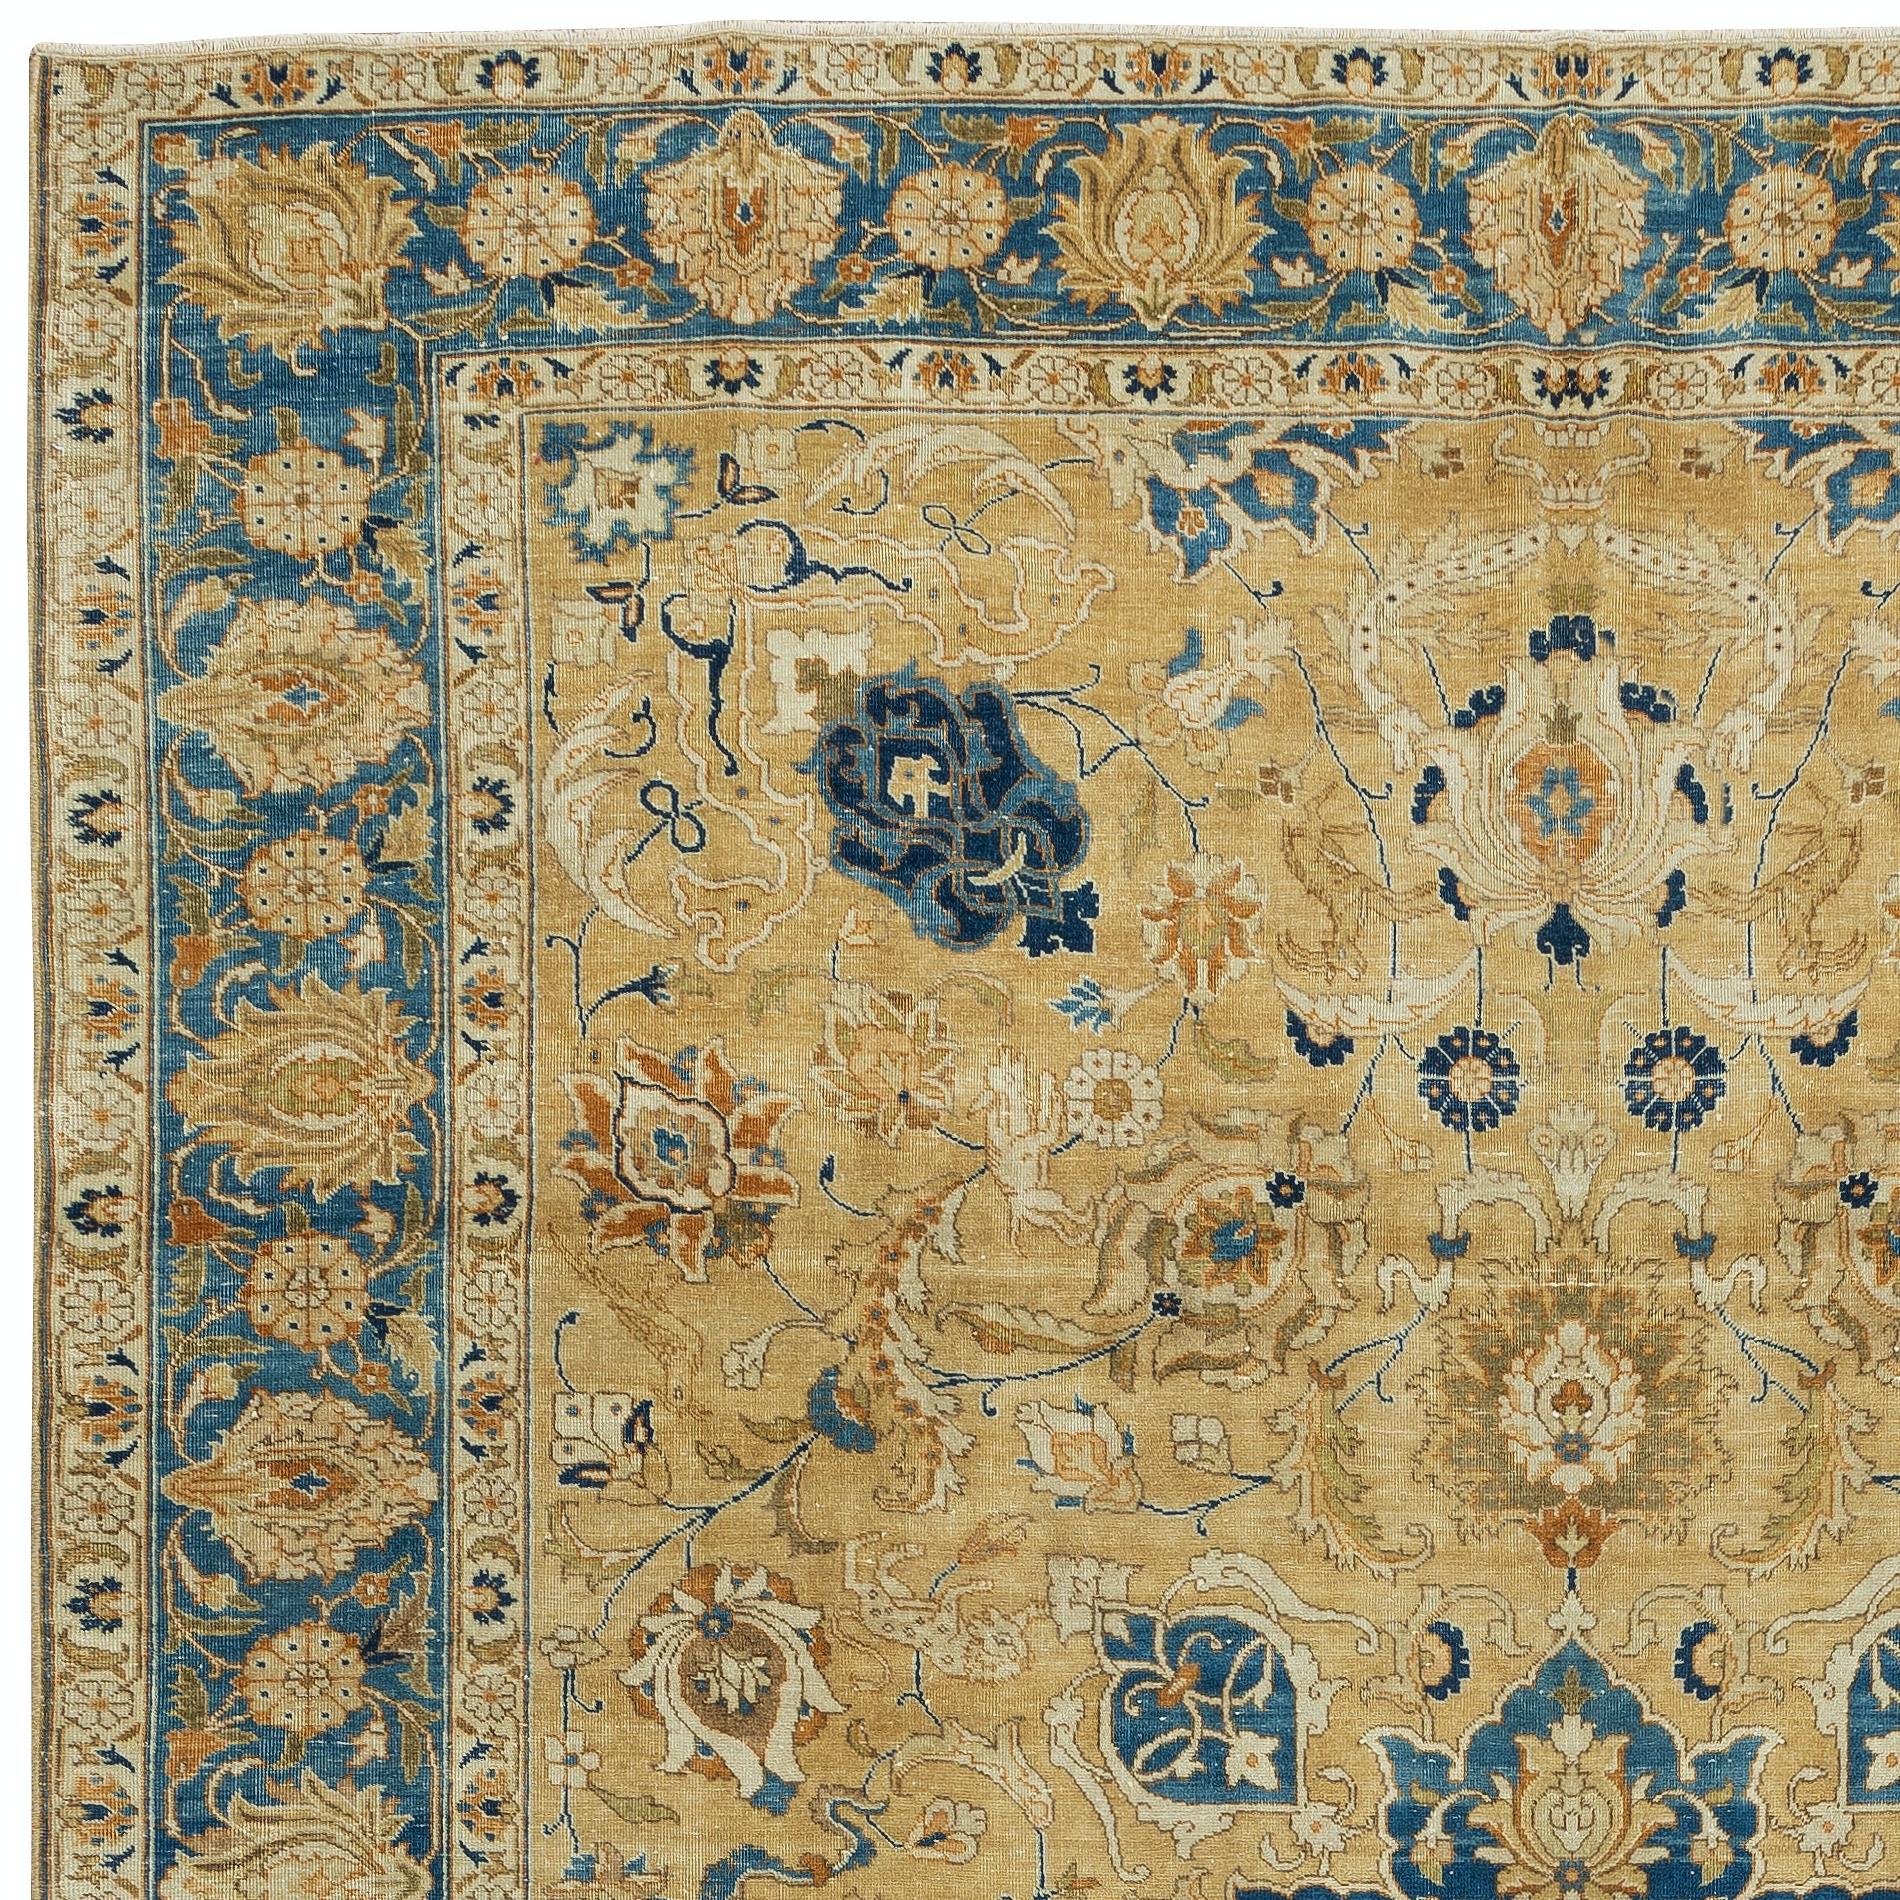 Oushak 8x11 Ft Hand Knotted Area Rug in Beige & Blue, Vintage Floral Turkish Carpet For Sale